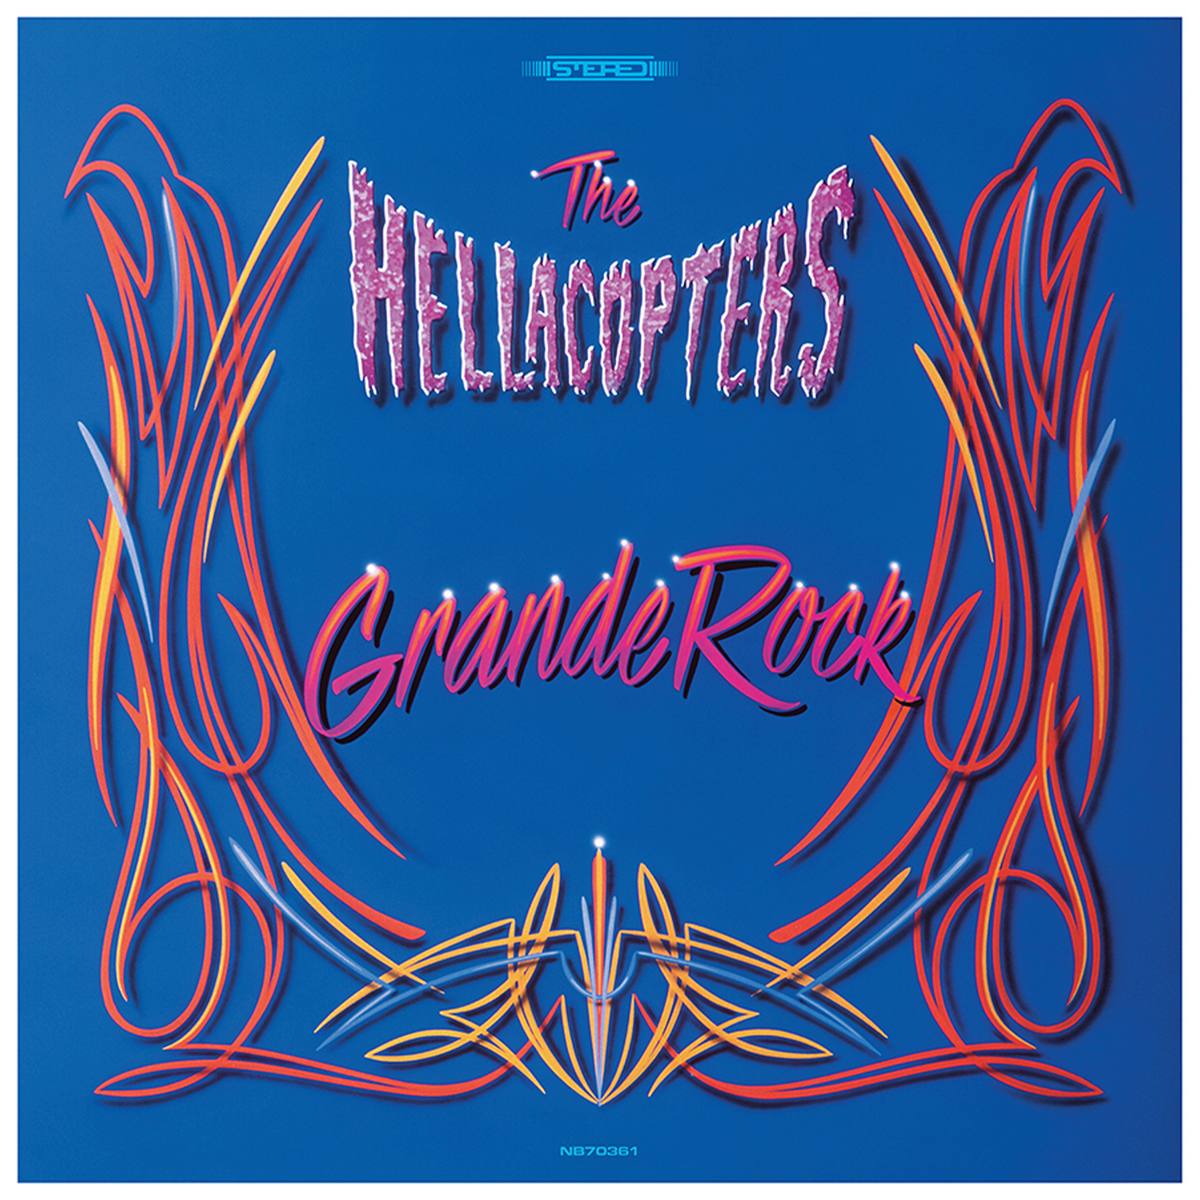 Hellacopters "Grande Rock Revisited" [Clear Purple Vinyl] 2LP